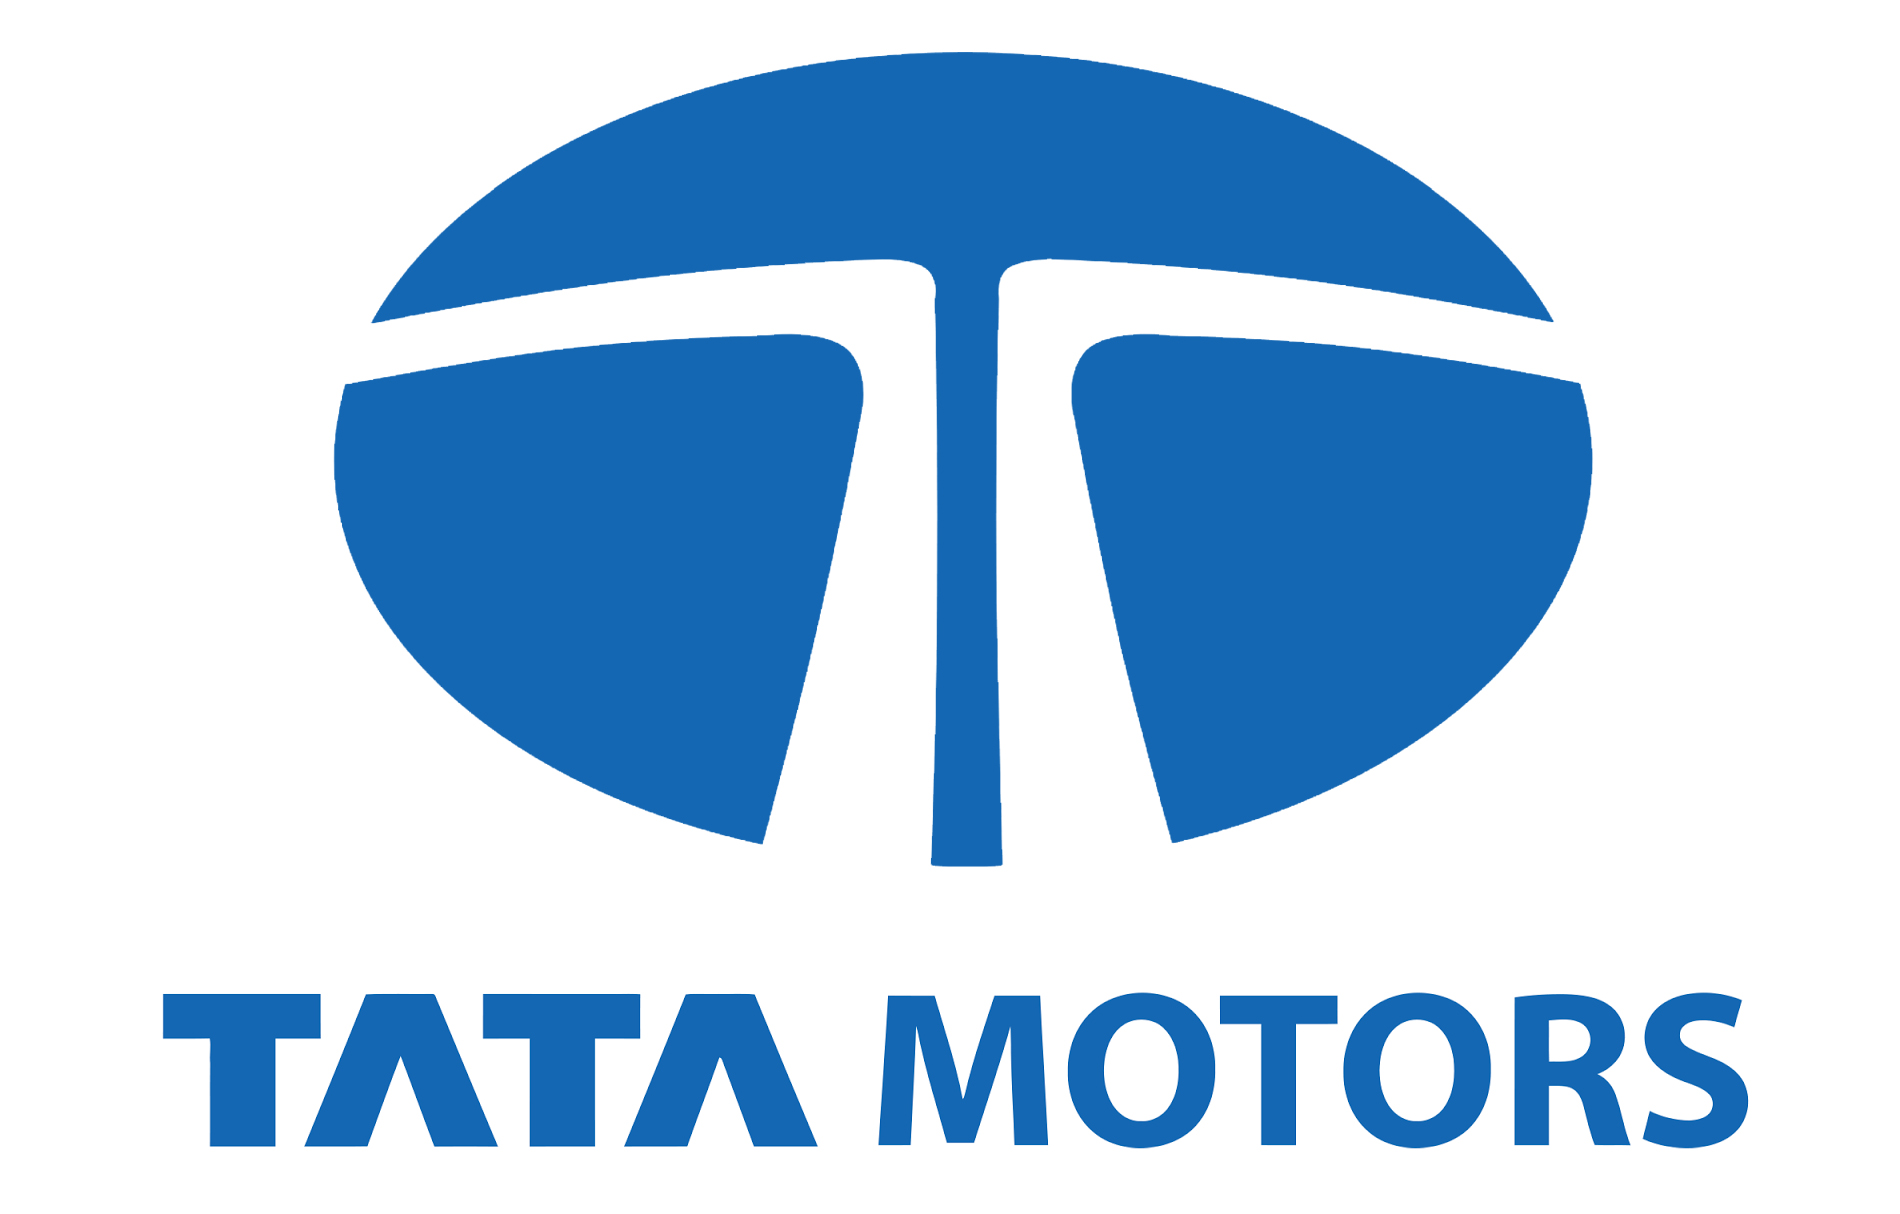 Tata Motors Cars Showroom - The True Sai Works|Show Room|Automotive